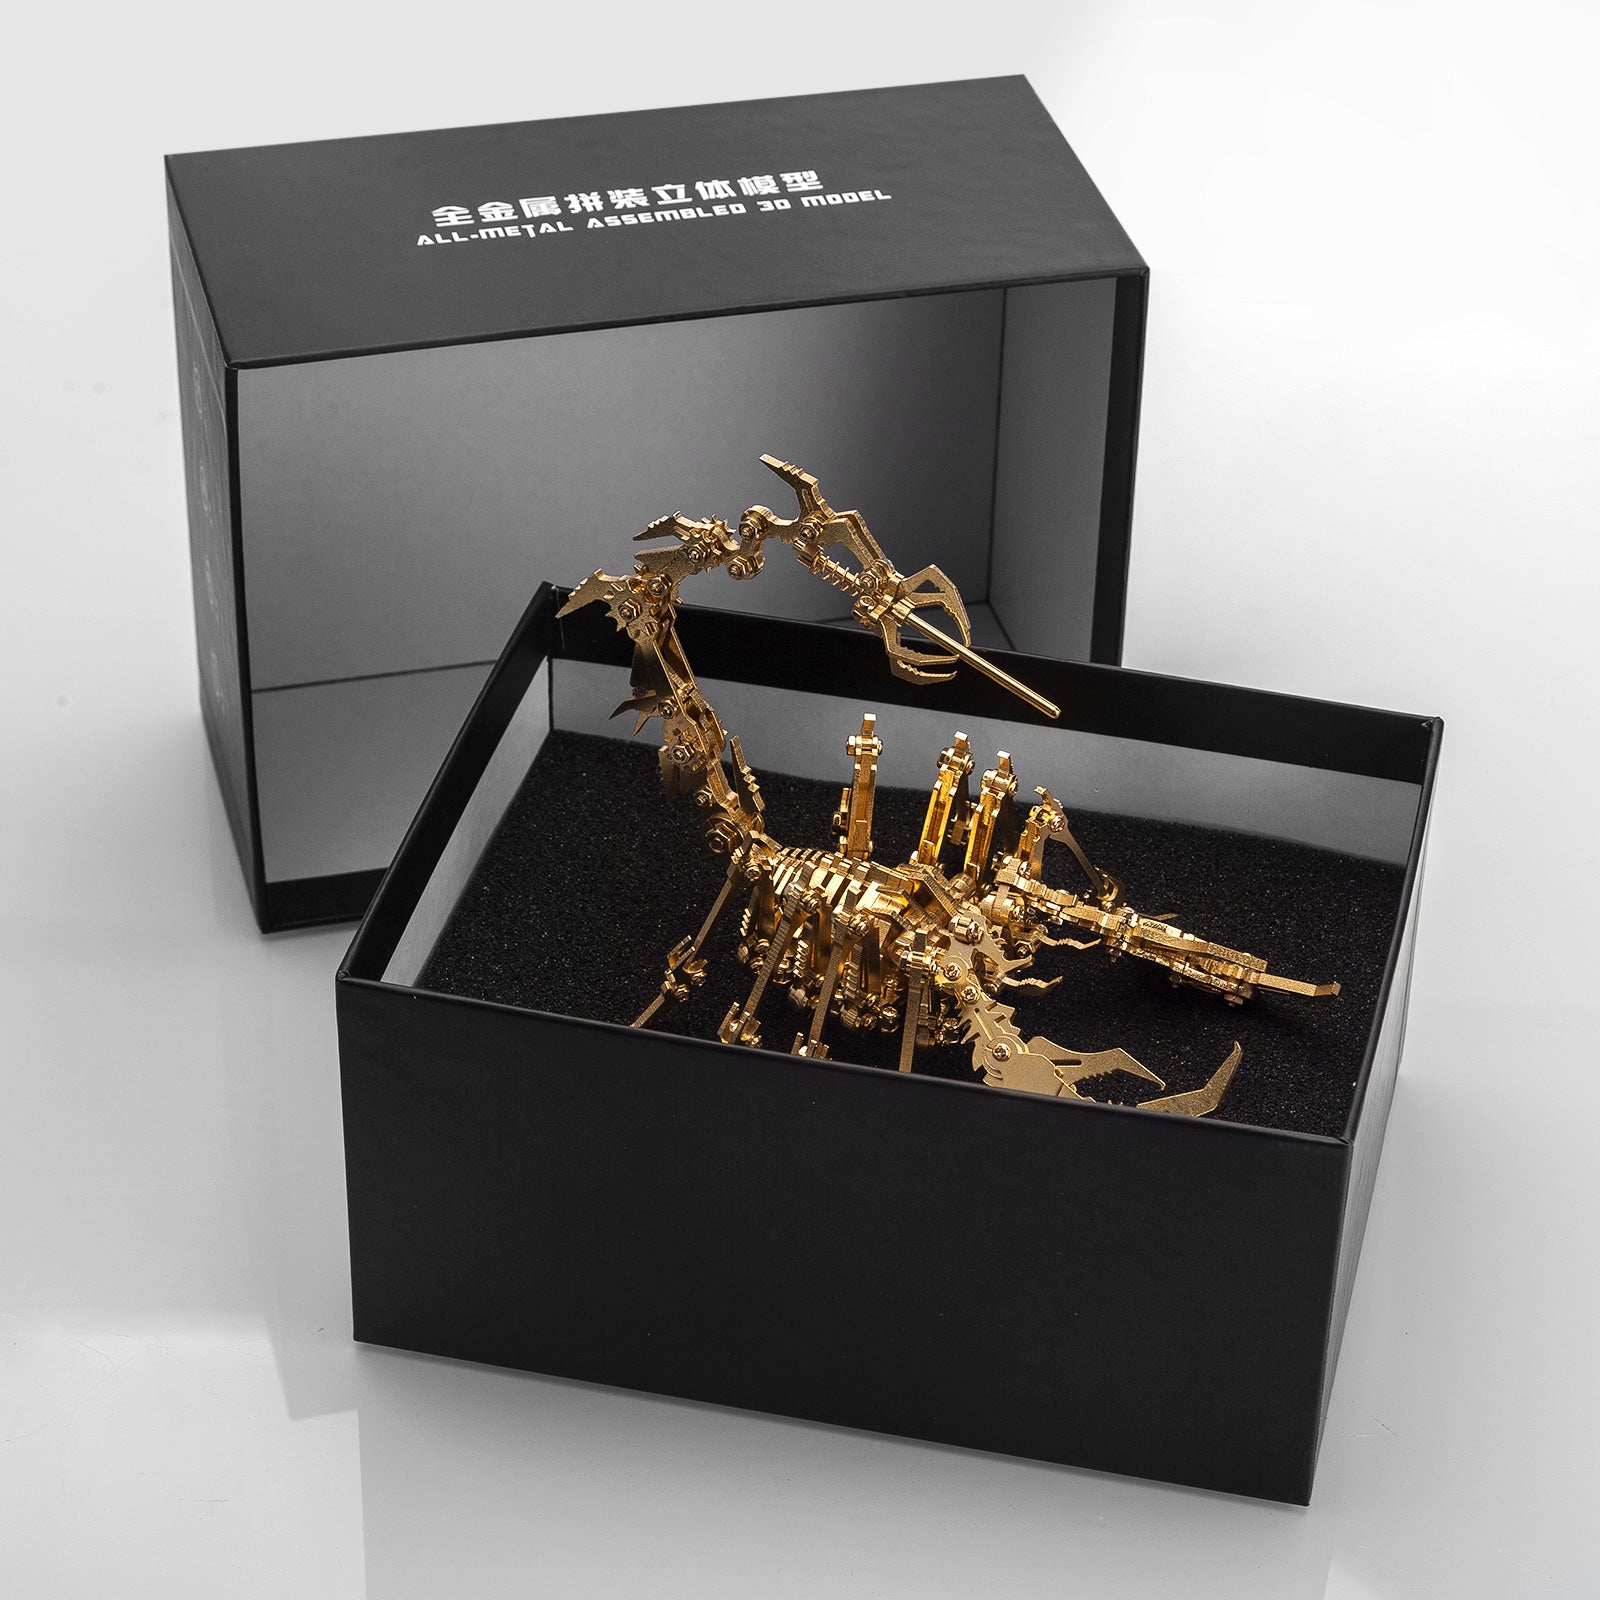 3D Metal Puzzle Goldern Scorpion King DIY Model Kit